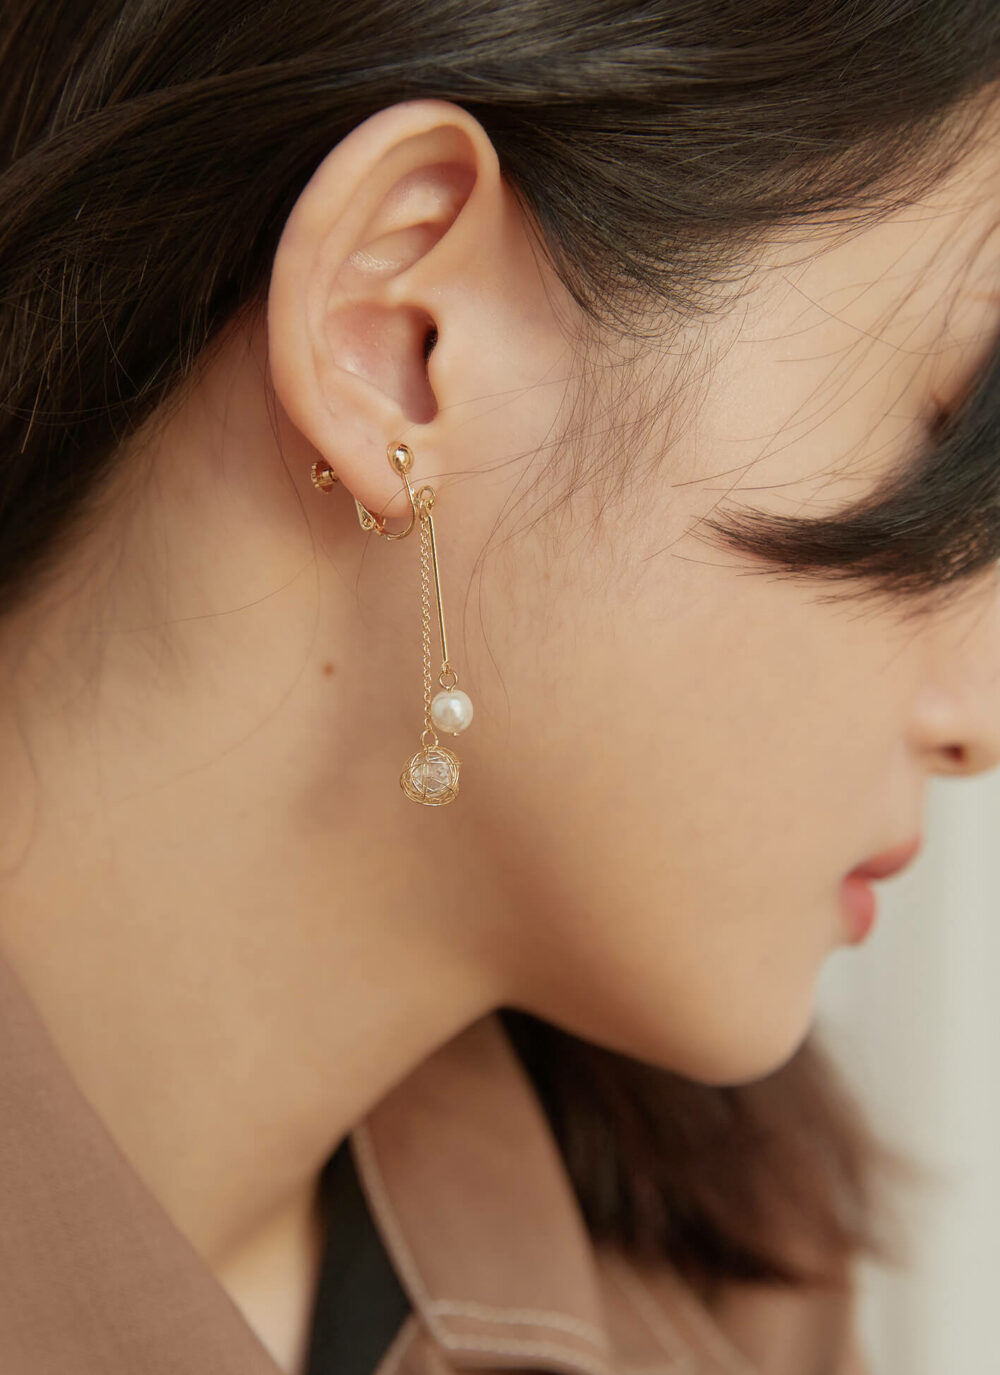 Eco安珂,韓國飾品,韓國耳環,韓國耳骨夾,垂墜耳環,螺旋夾耳環,可調式耳夾耳環,螺旋夾垂墜耳環